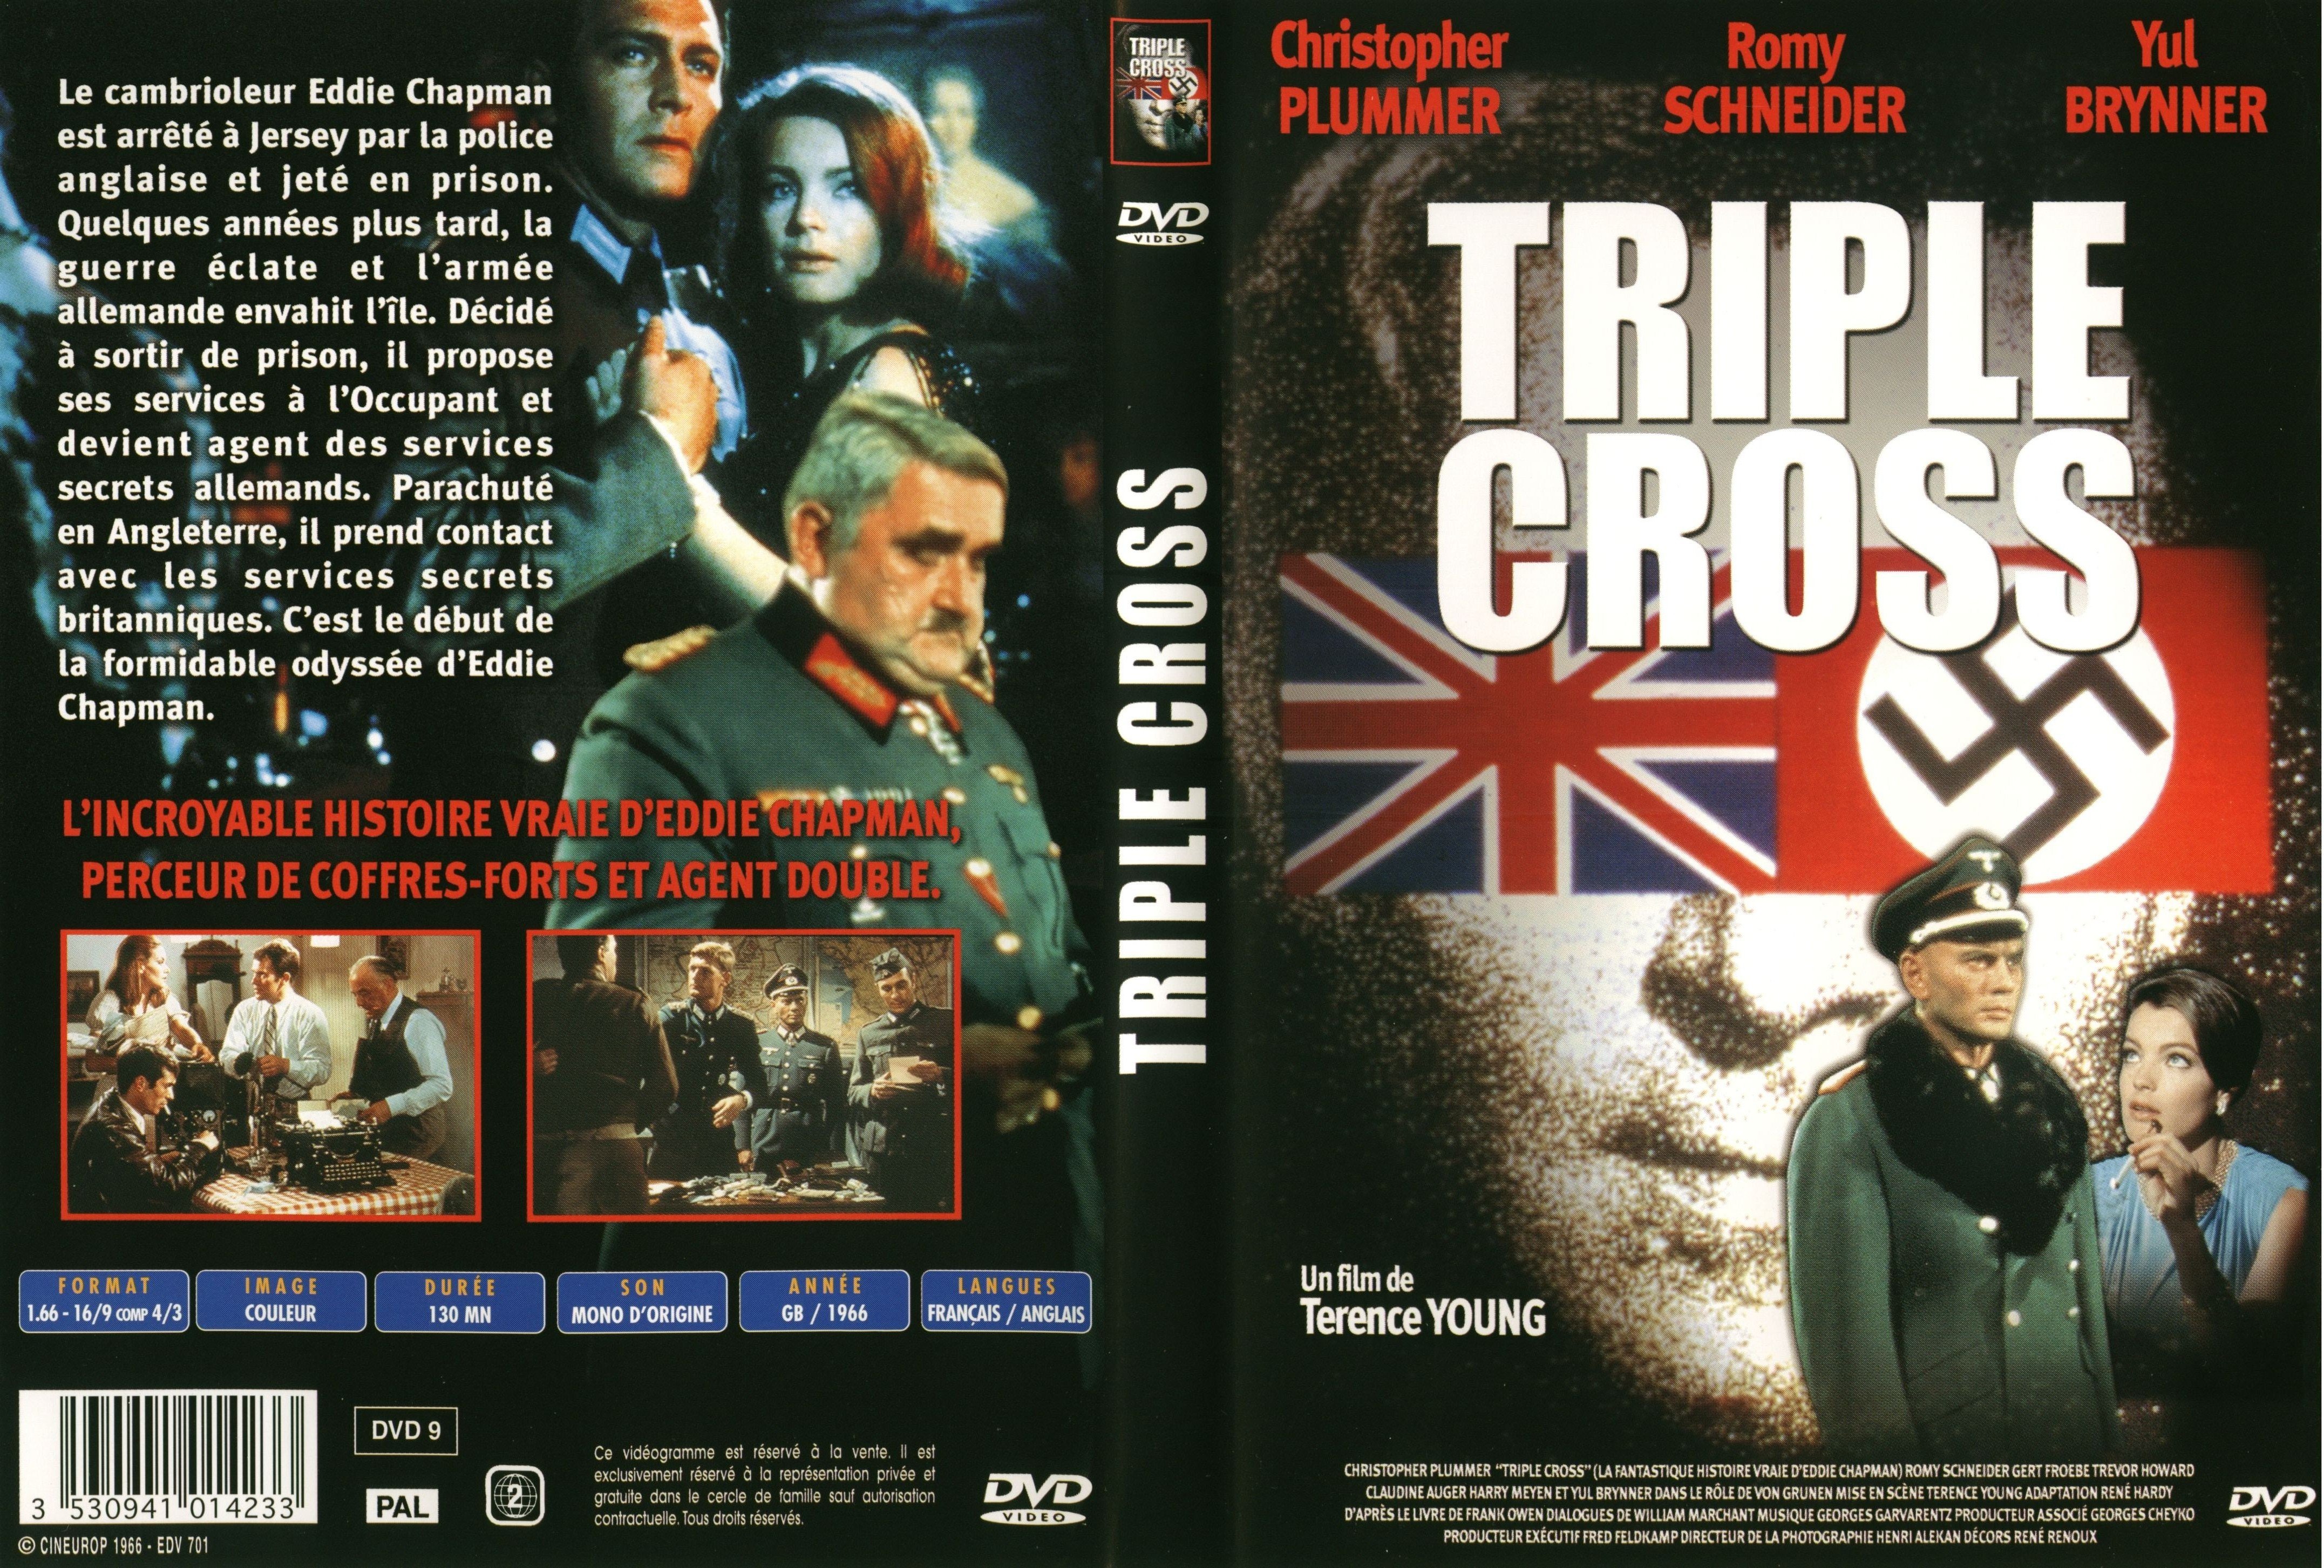 Jaquette DVD Triple Cross v2